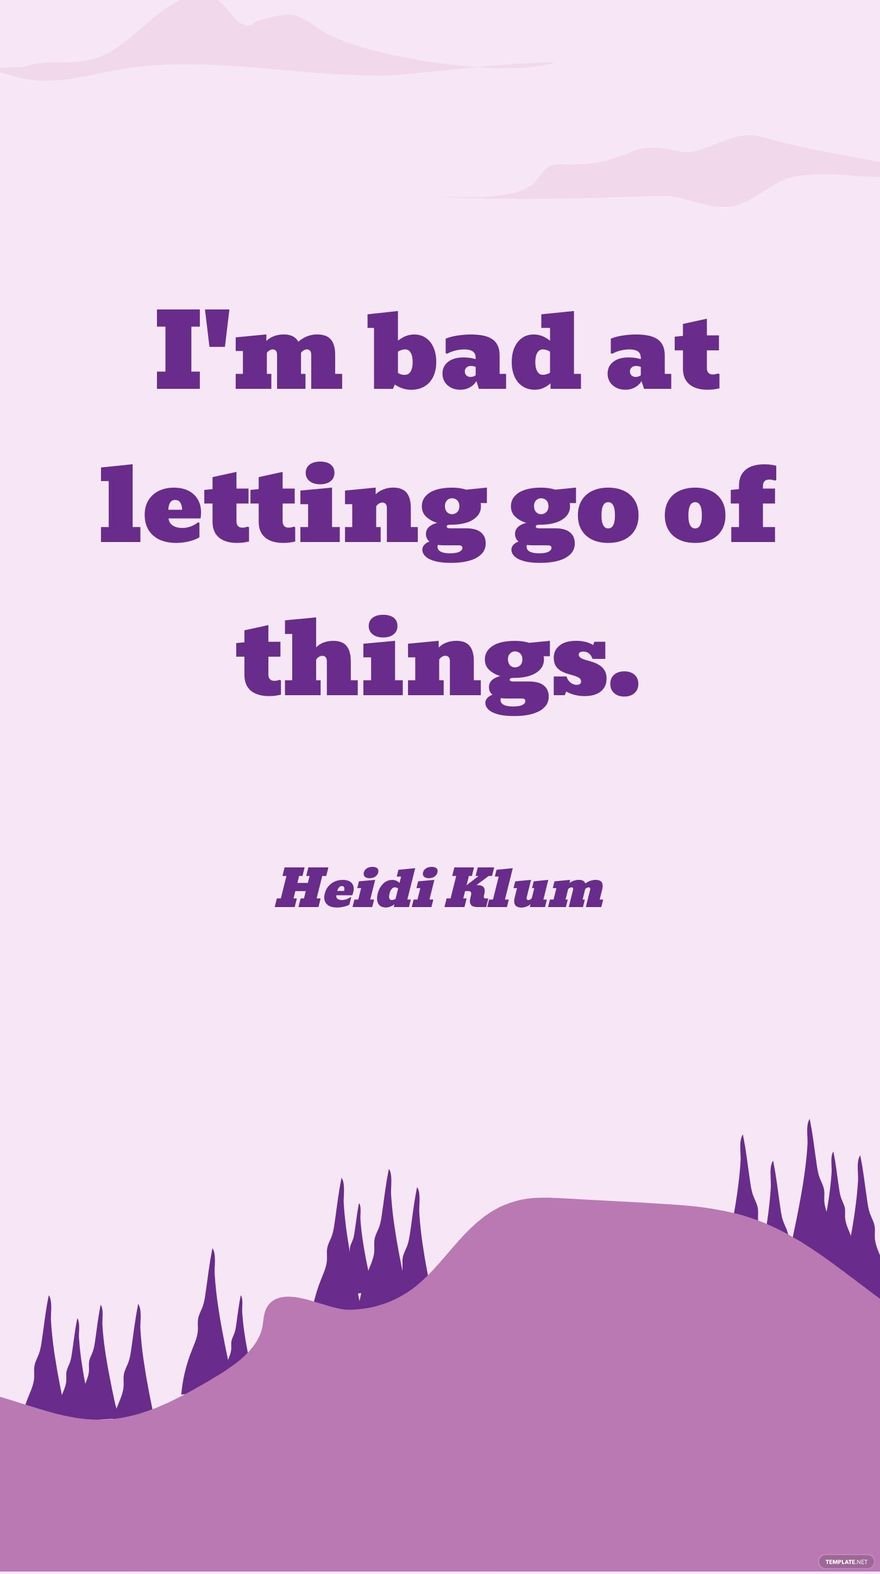 Heidi Klum - I'm bad at letting go of things.